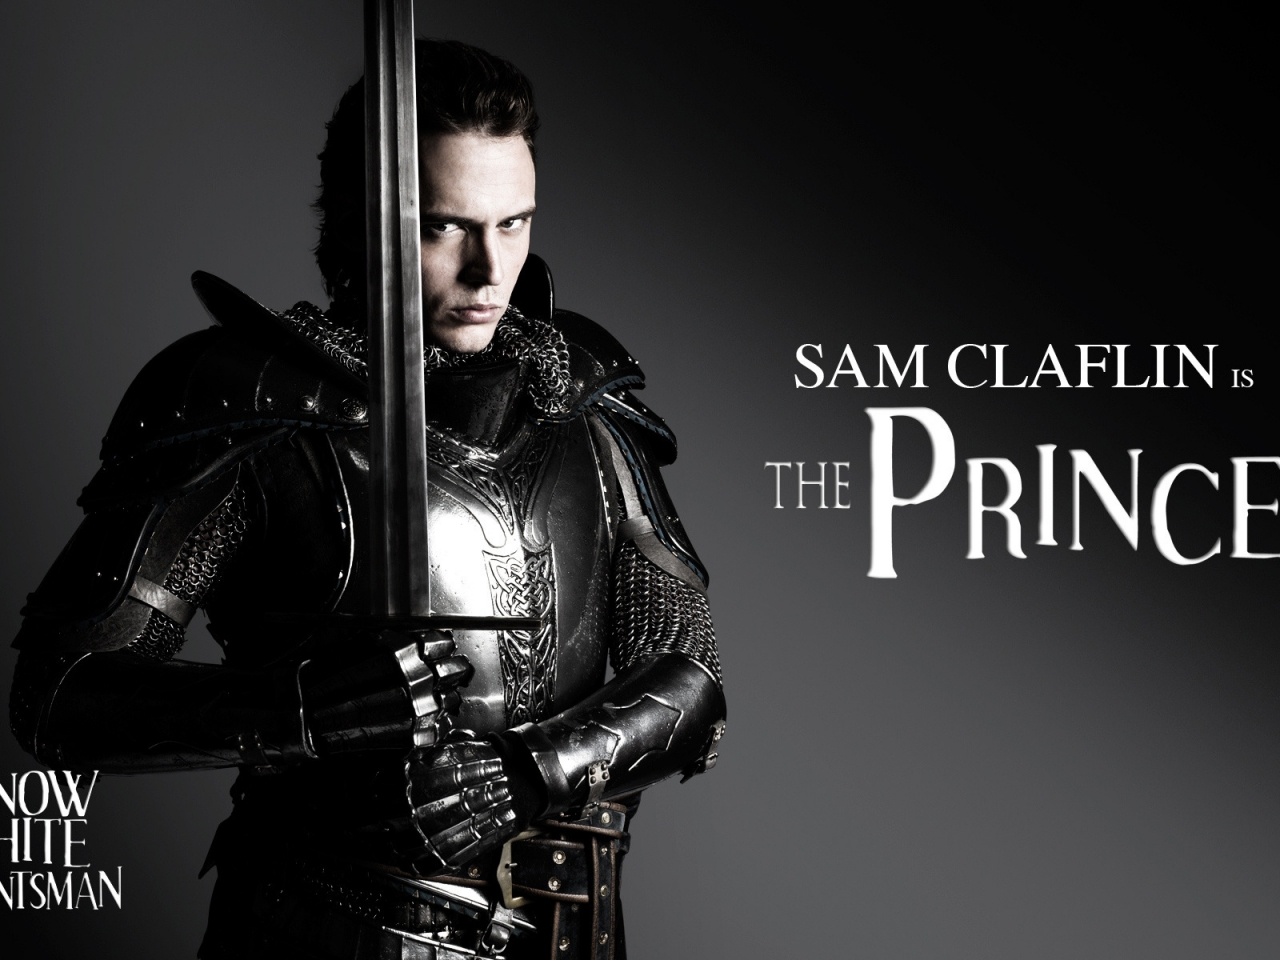 Sam Claflin The Prince for 1280 x 960 resolution